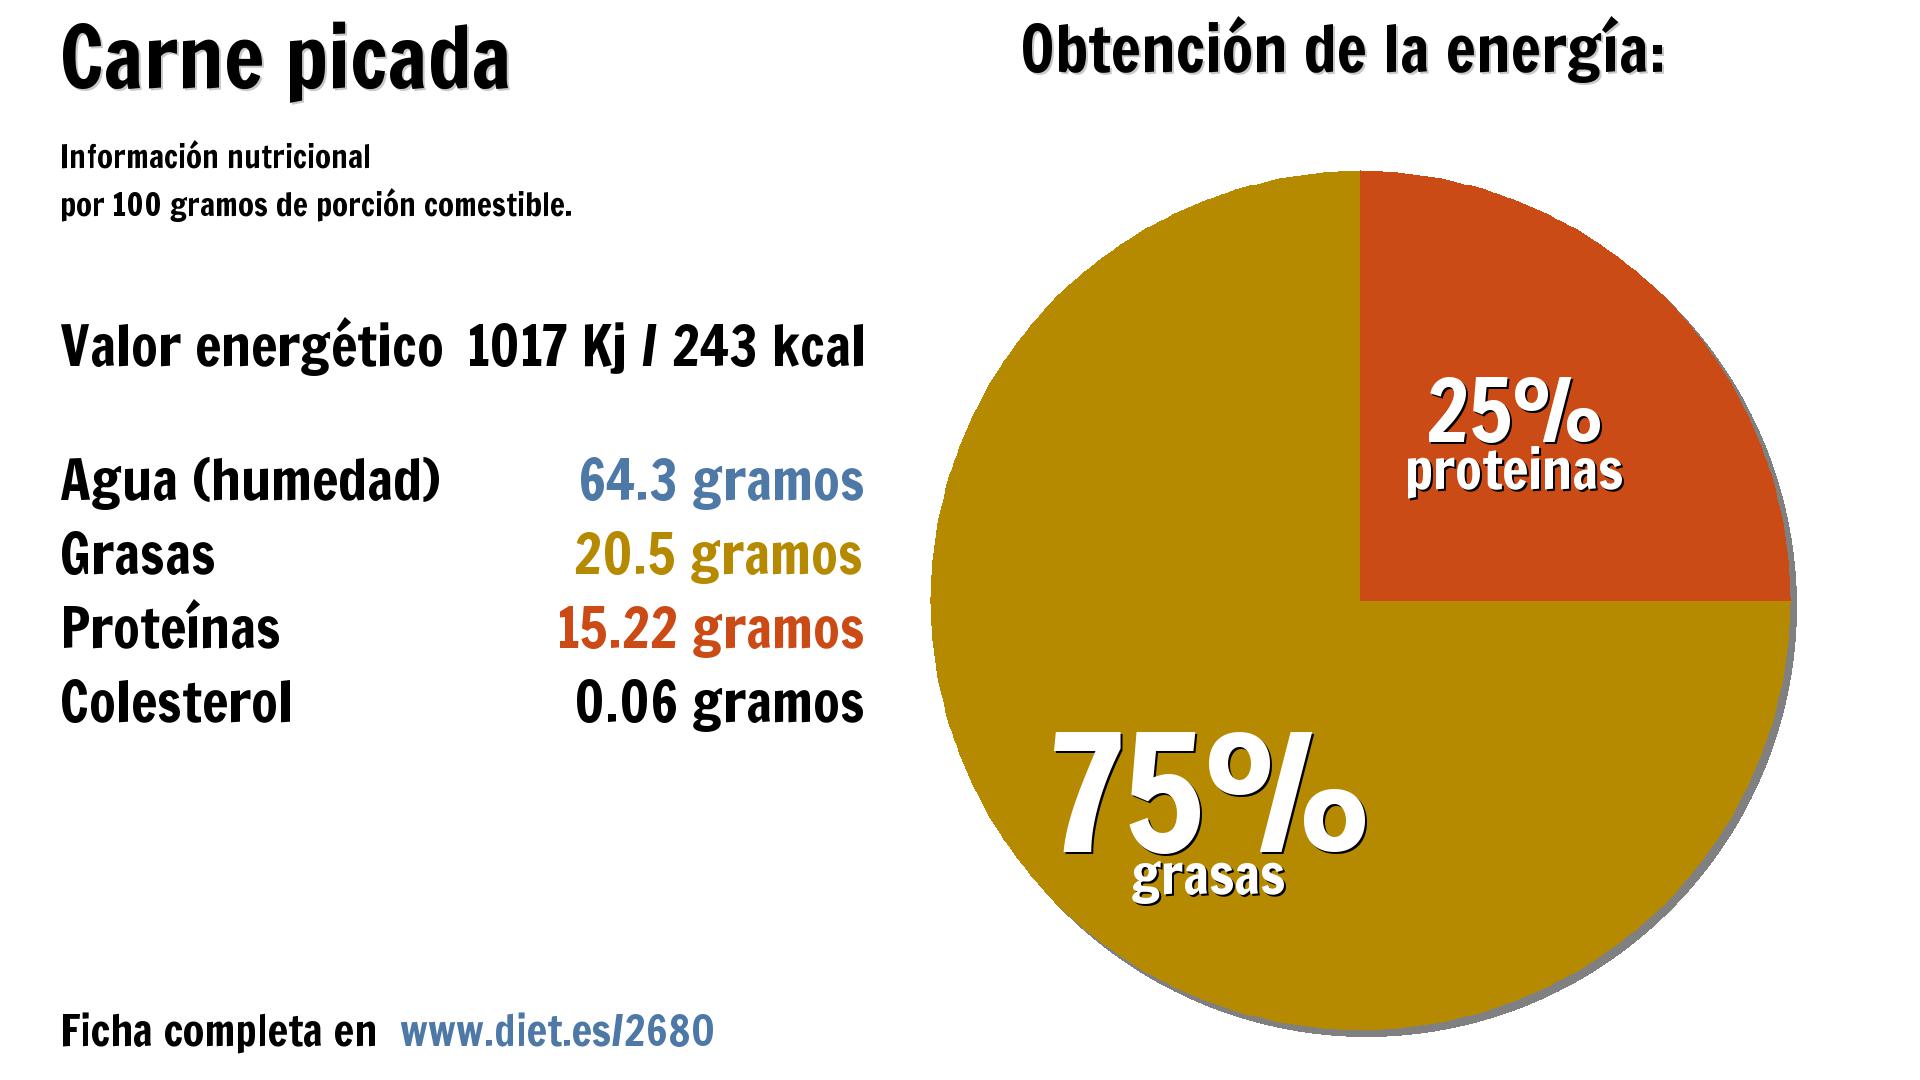 Carne picada: energía 1017 Kj, agua 64 g., grasas 21 g. y proteínas 15 g.